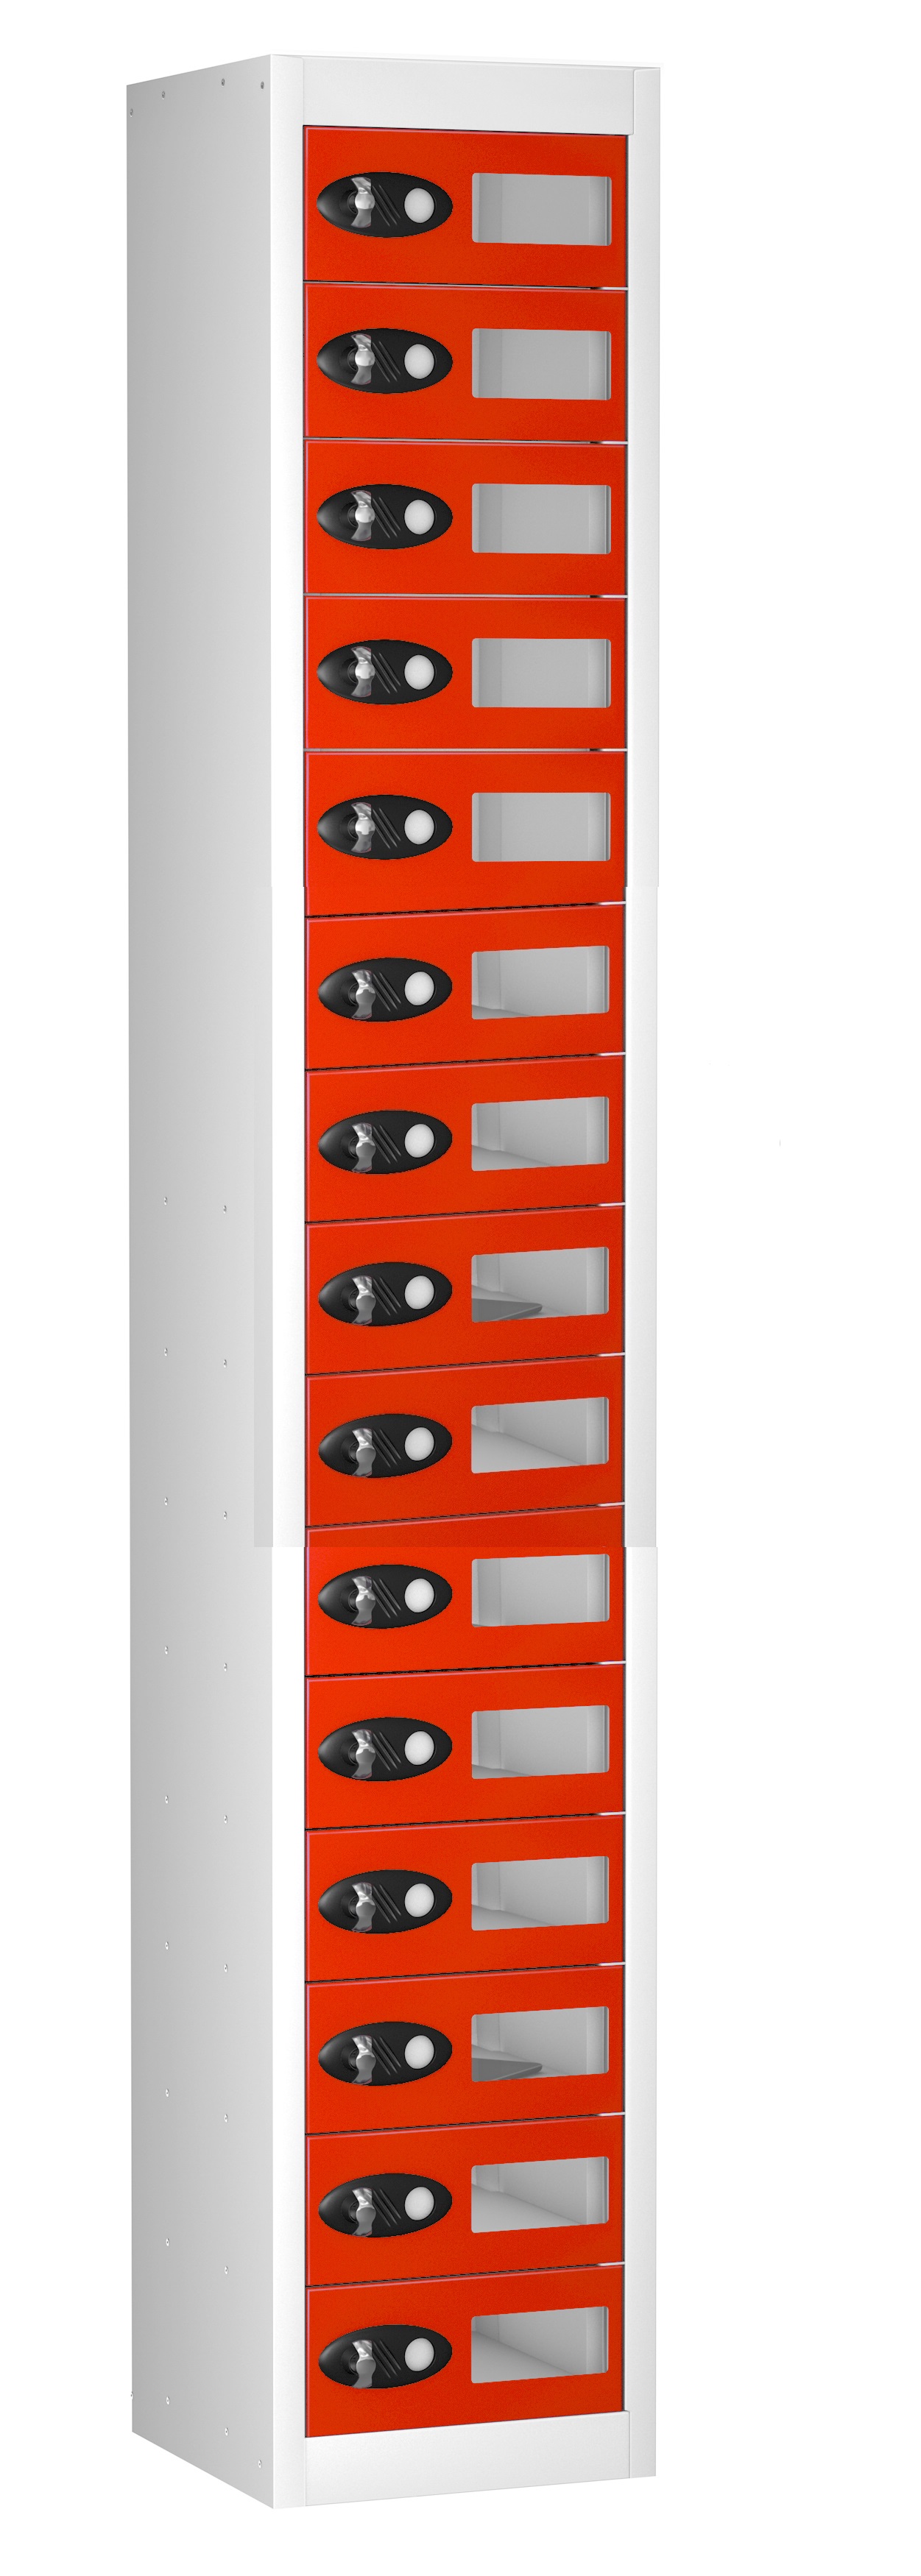 VISION PANEL Mobile Phone Storage Locker -15 Doors (Non Charging)